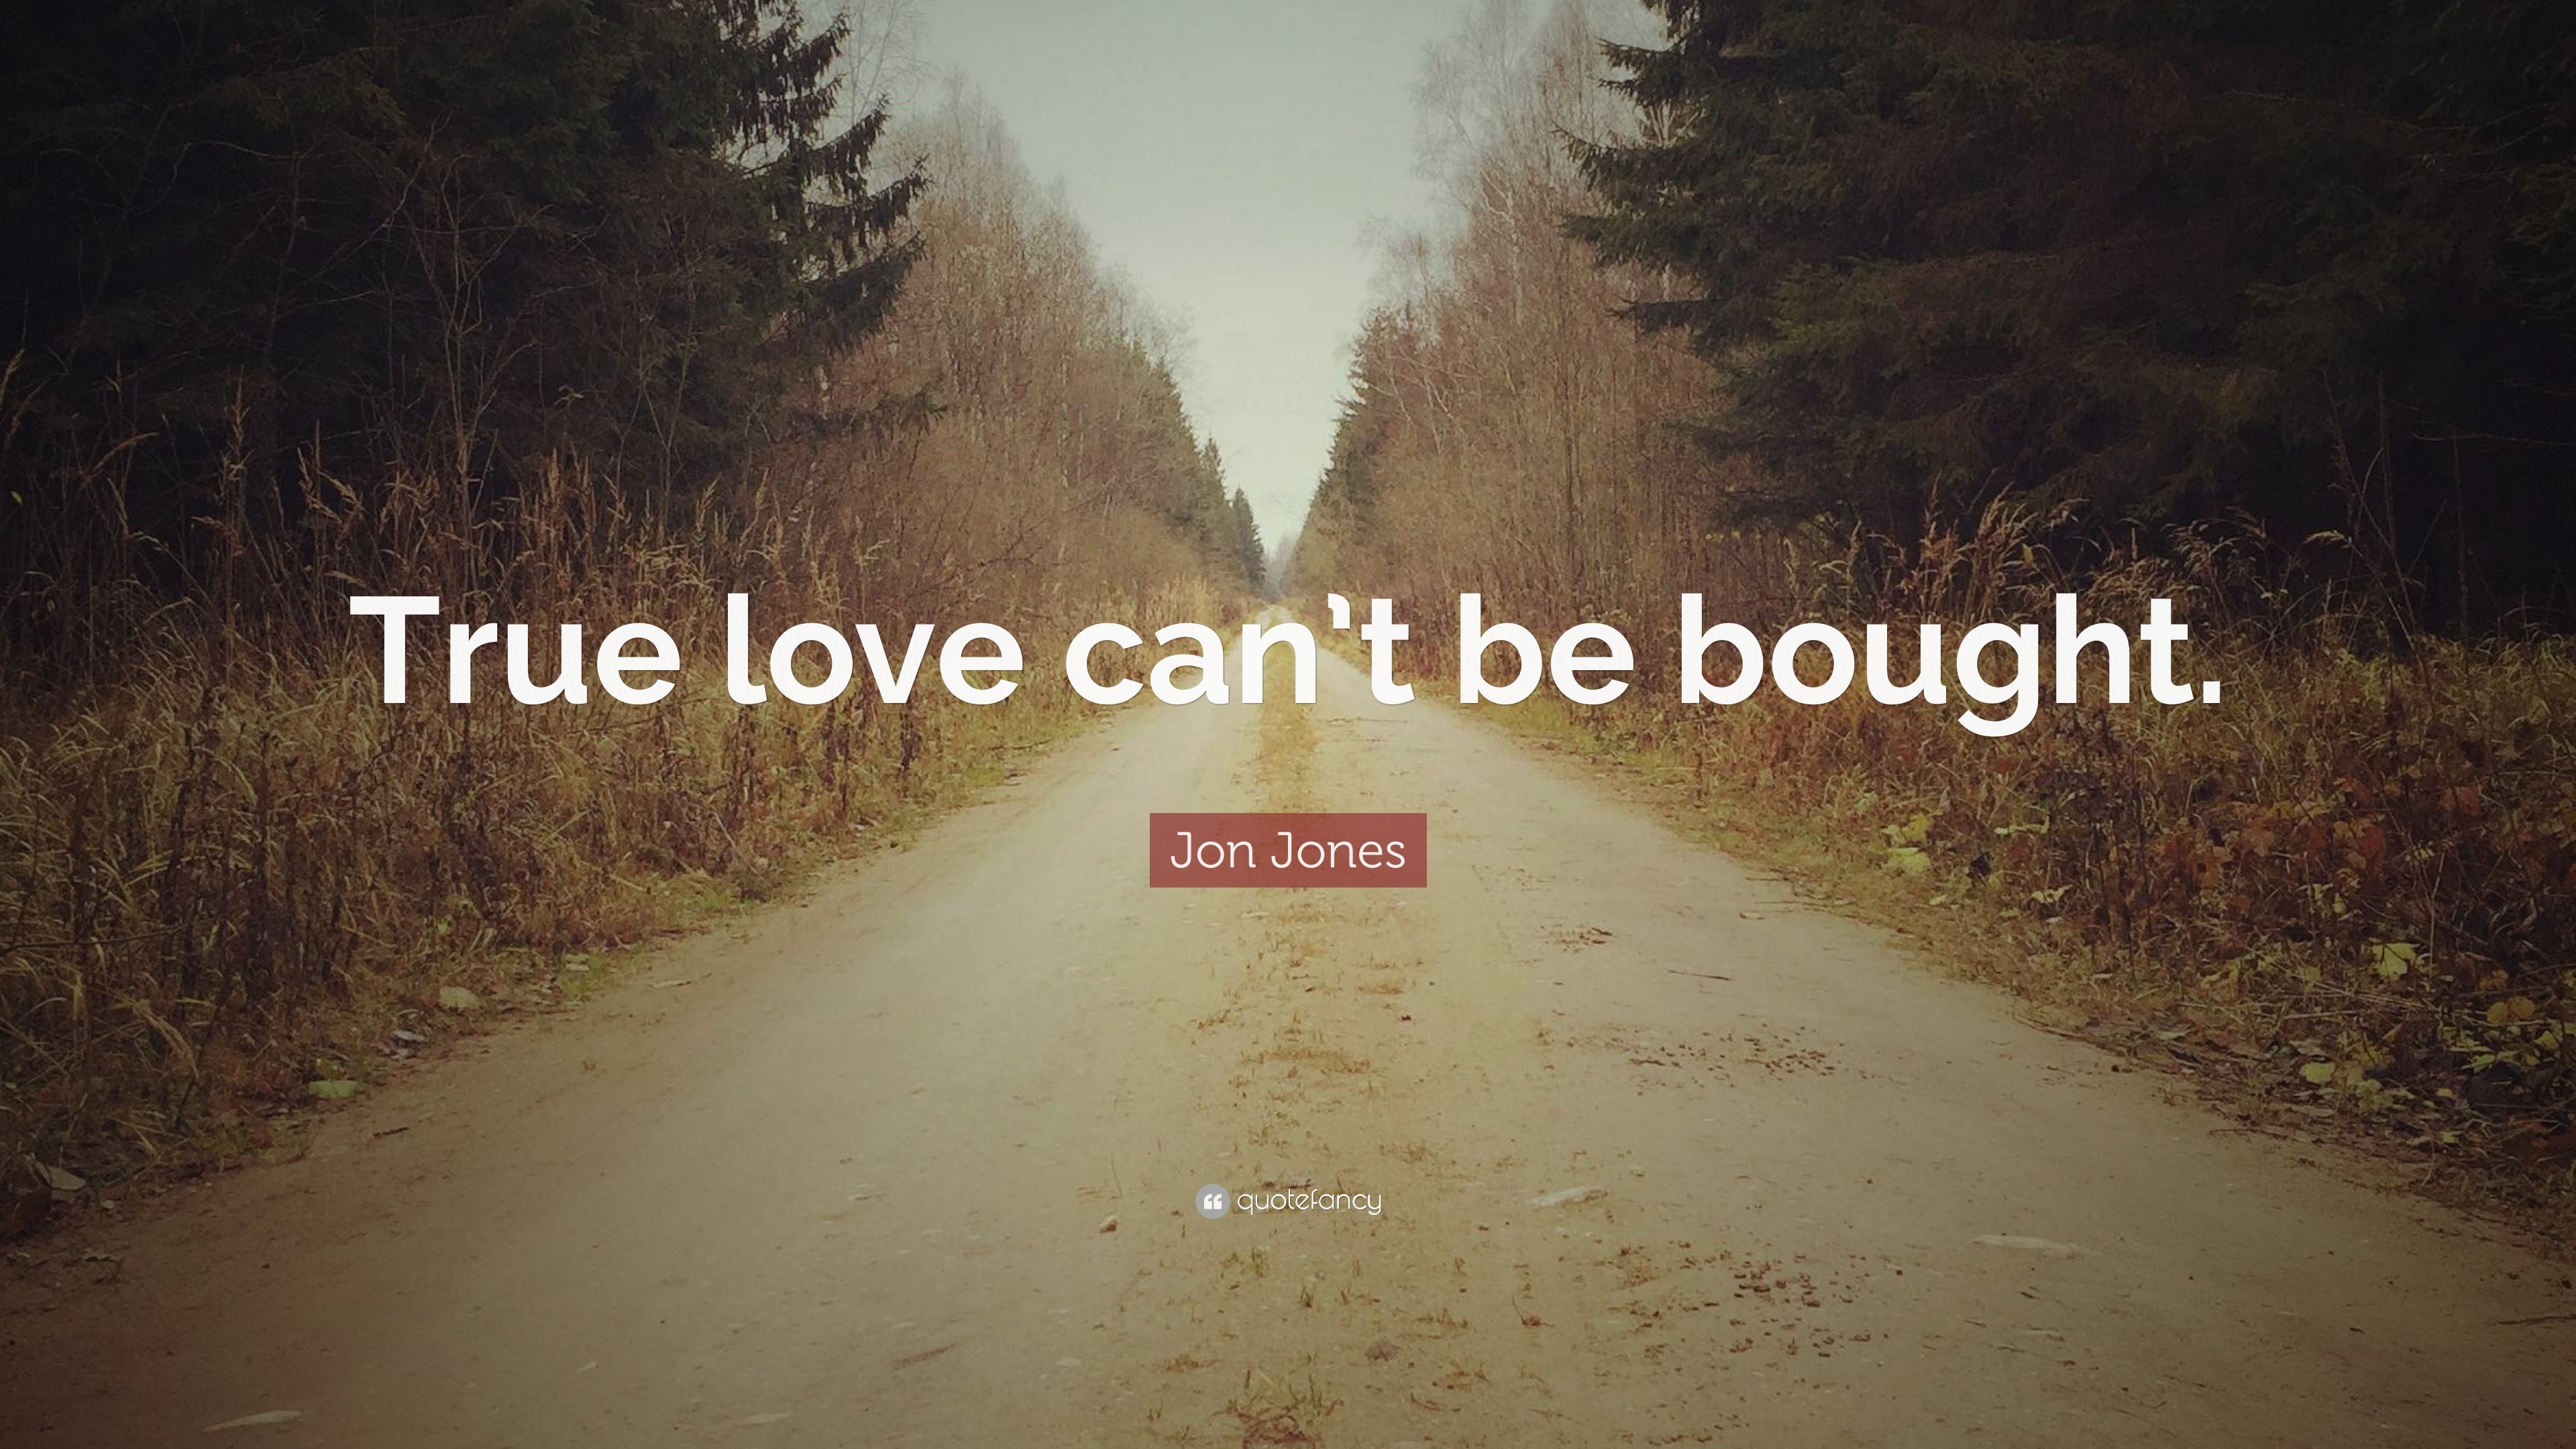 Jon Jones Quote “True love can t be bought ”